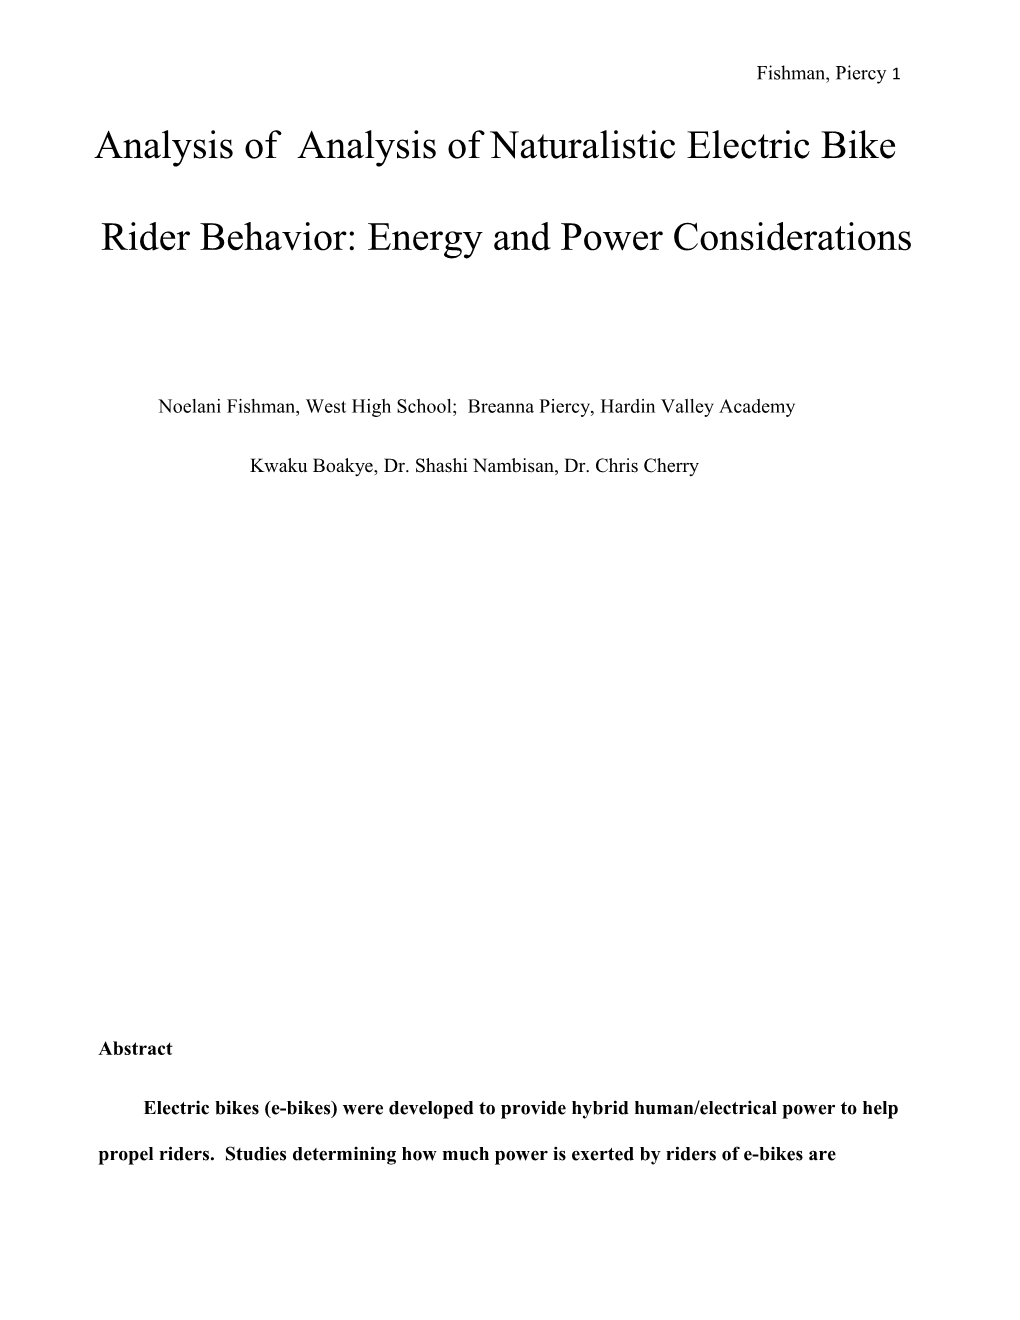 Analysis of Analysis of Naturalistic Electric Bike Rider Behavior: Energy and Power